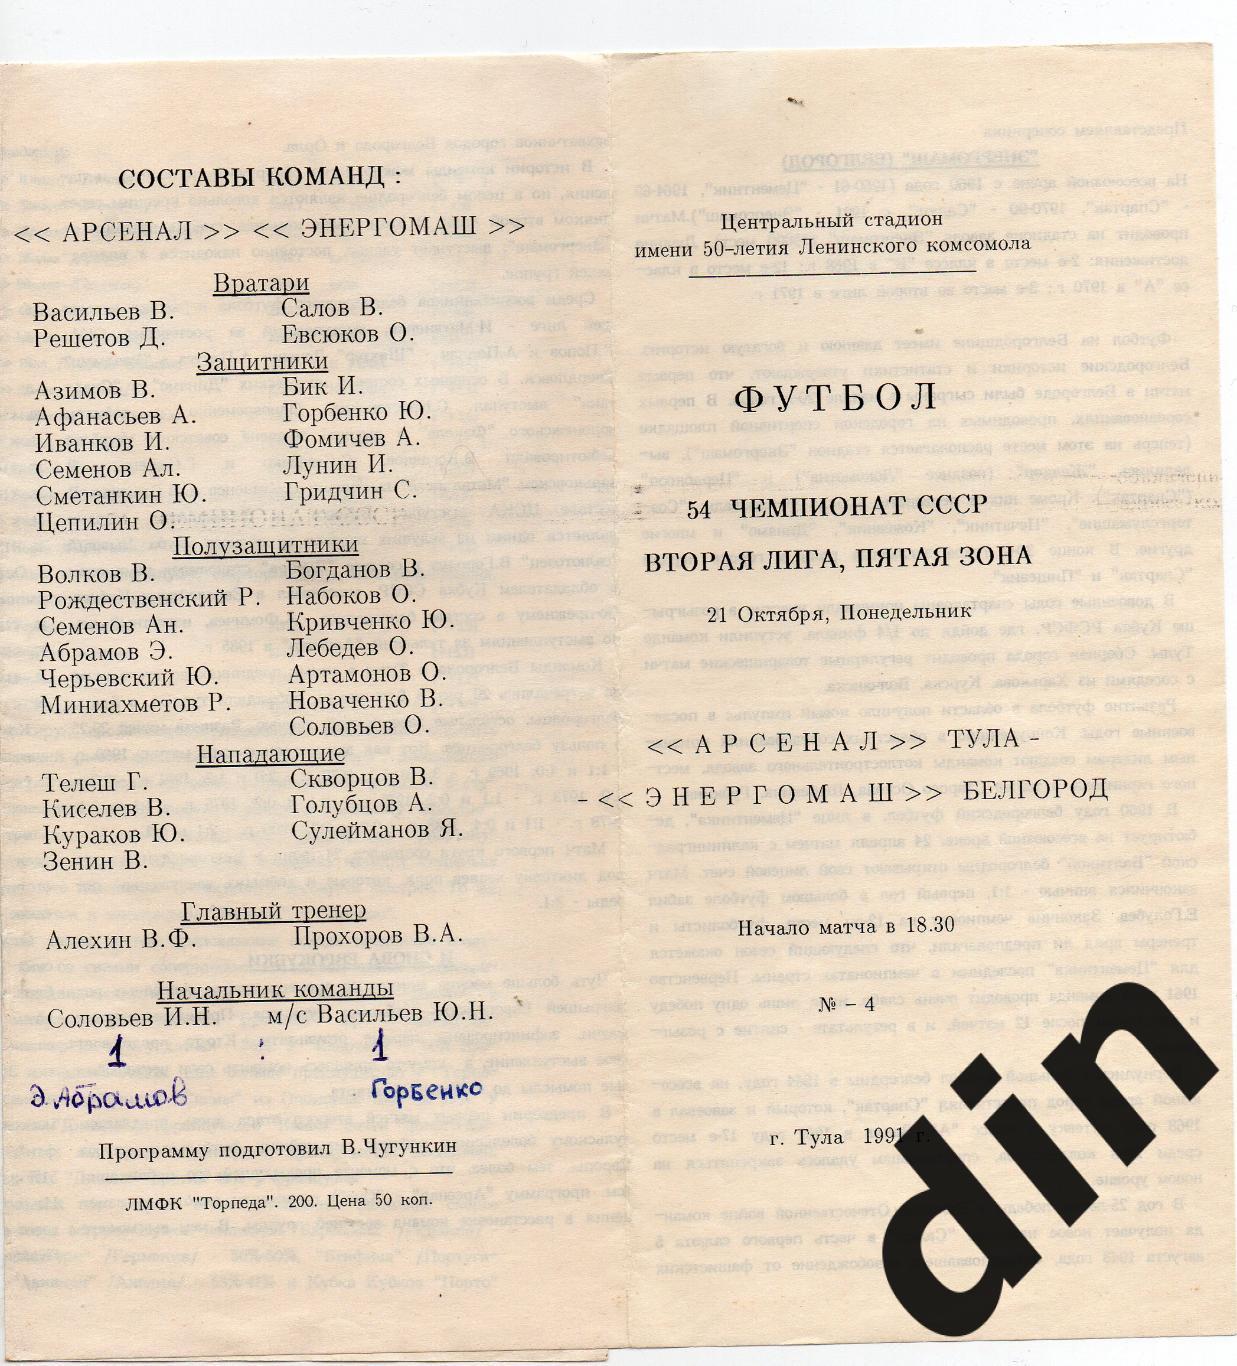 Арсенал Тула - Энергомаш Белгород 21.10.1991